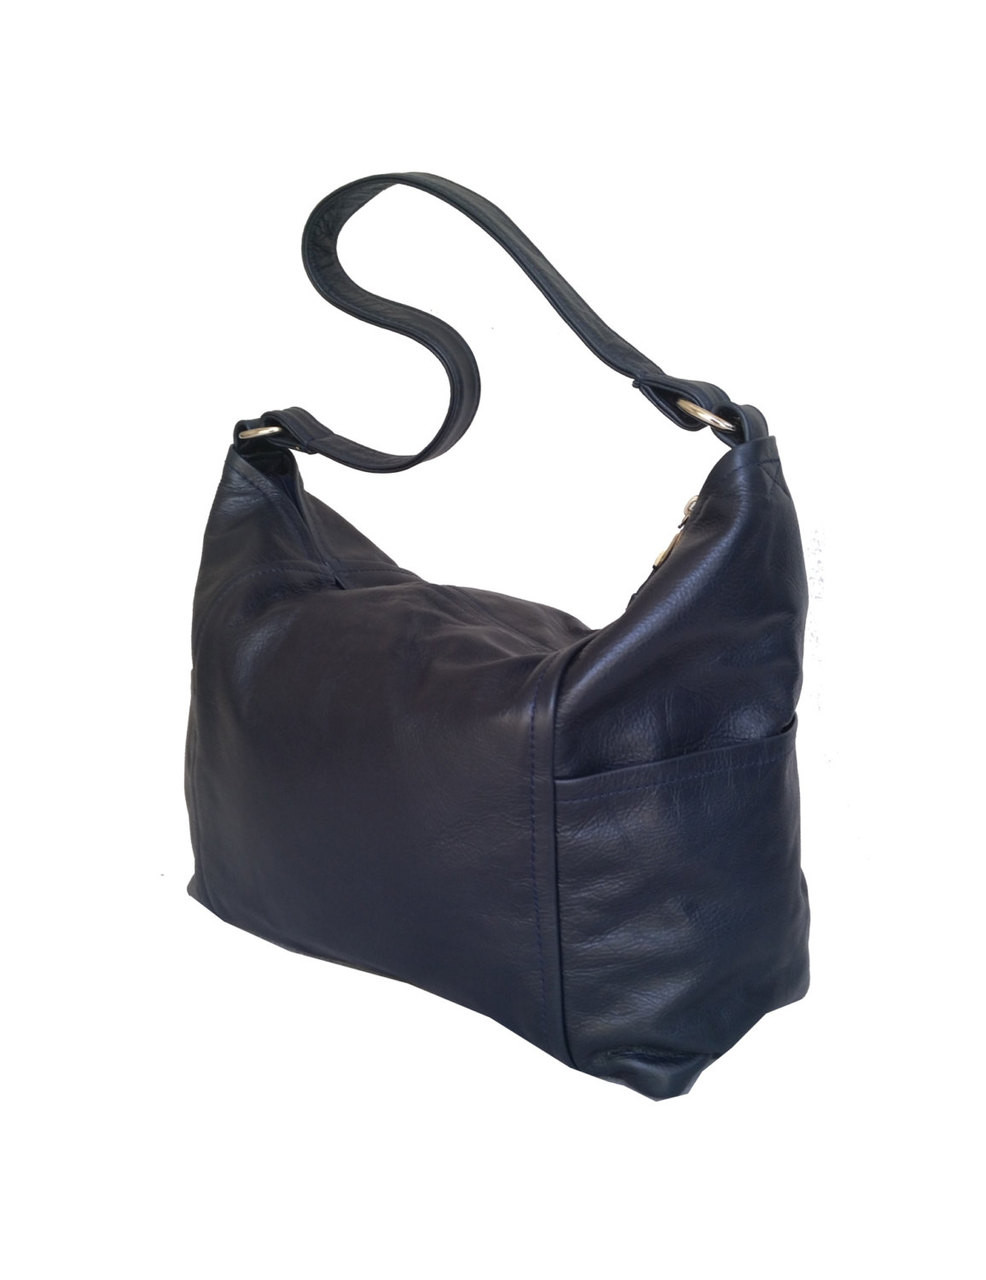 Blue Leather Bag, Hobo Casual Handbag, Everyday Purses, Kenia - Fgalaze ...